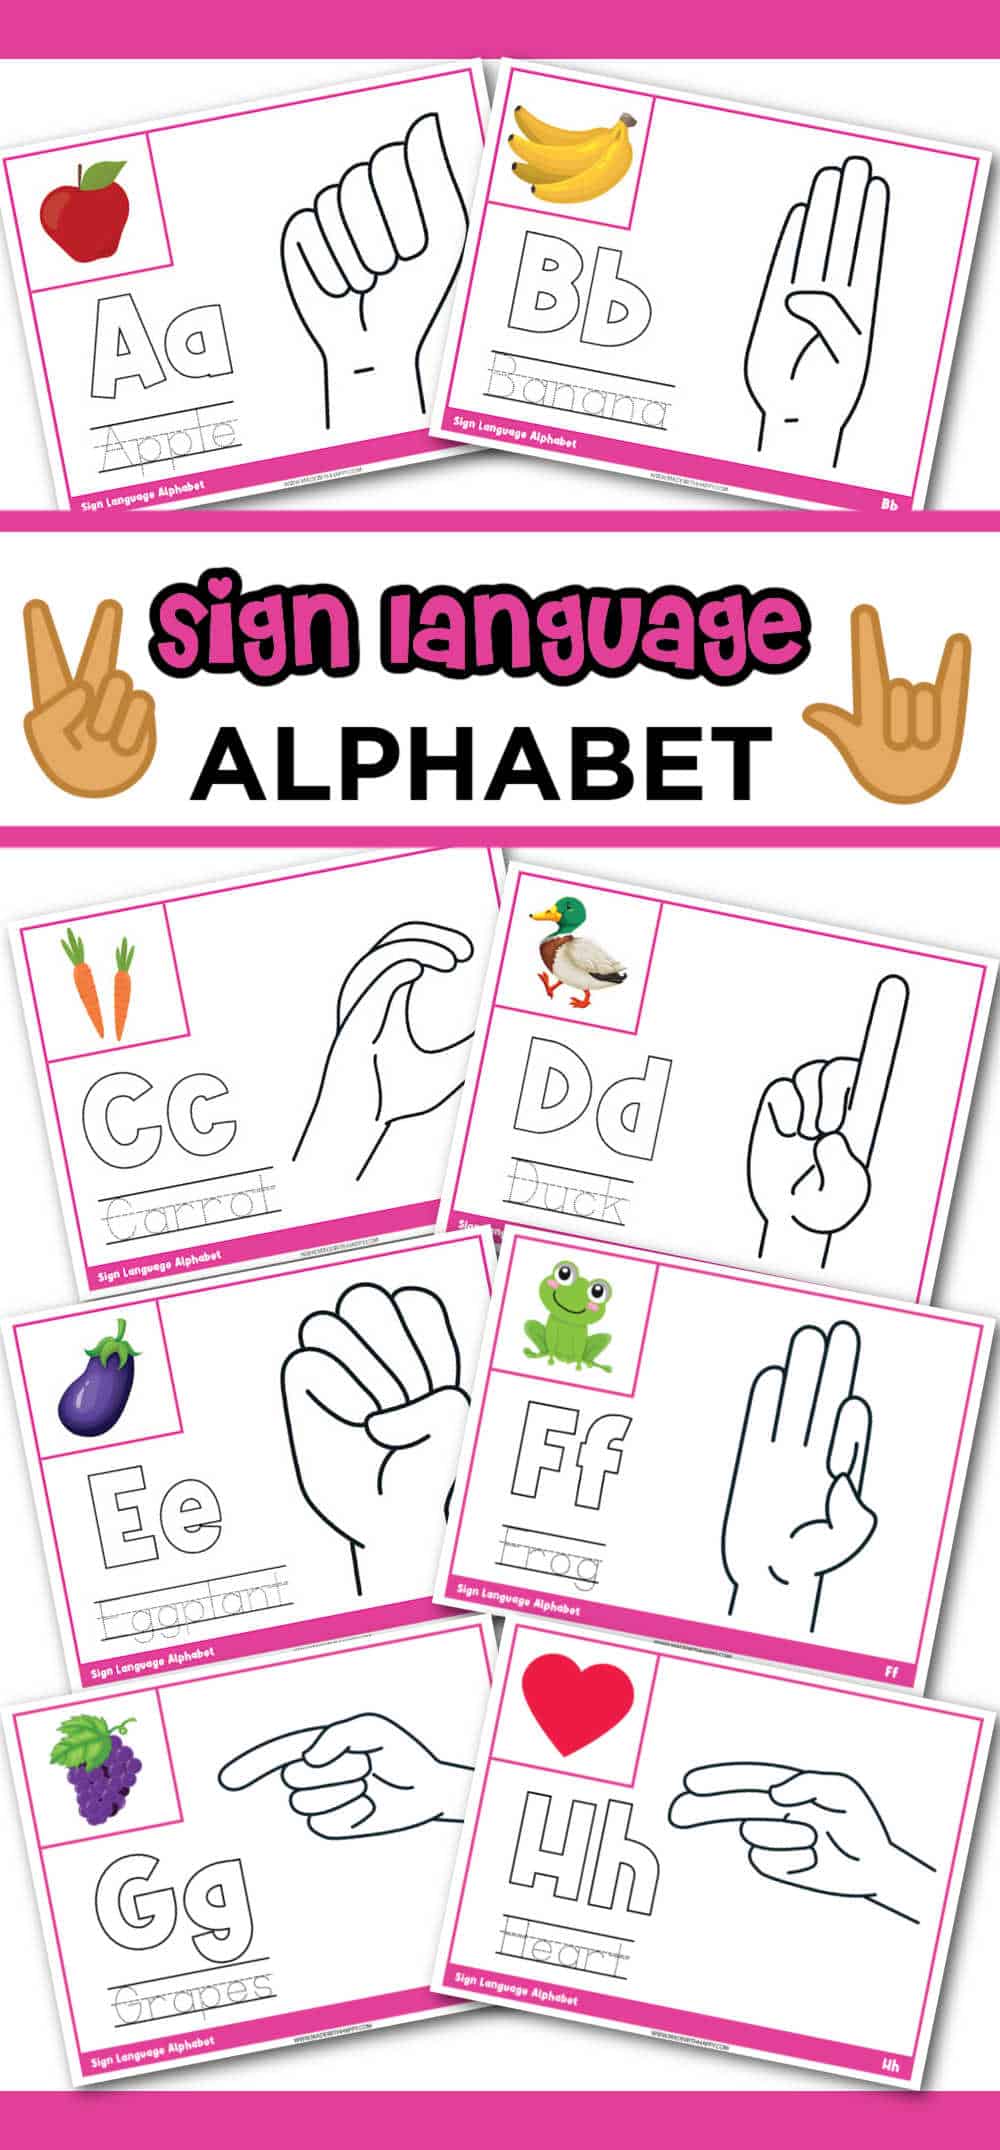 teach your kids sign language